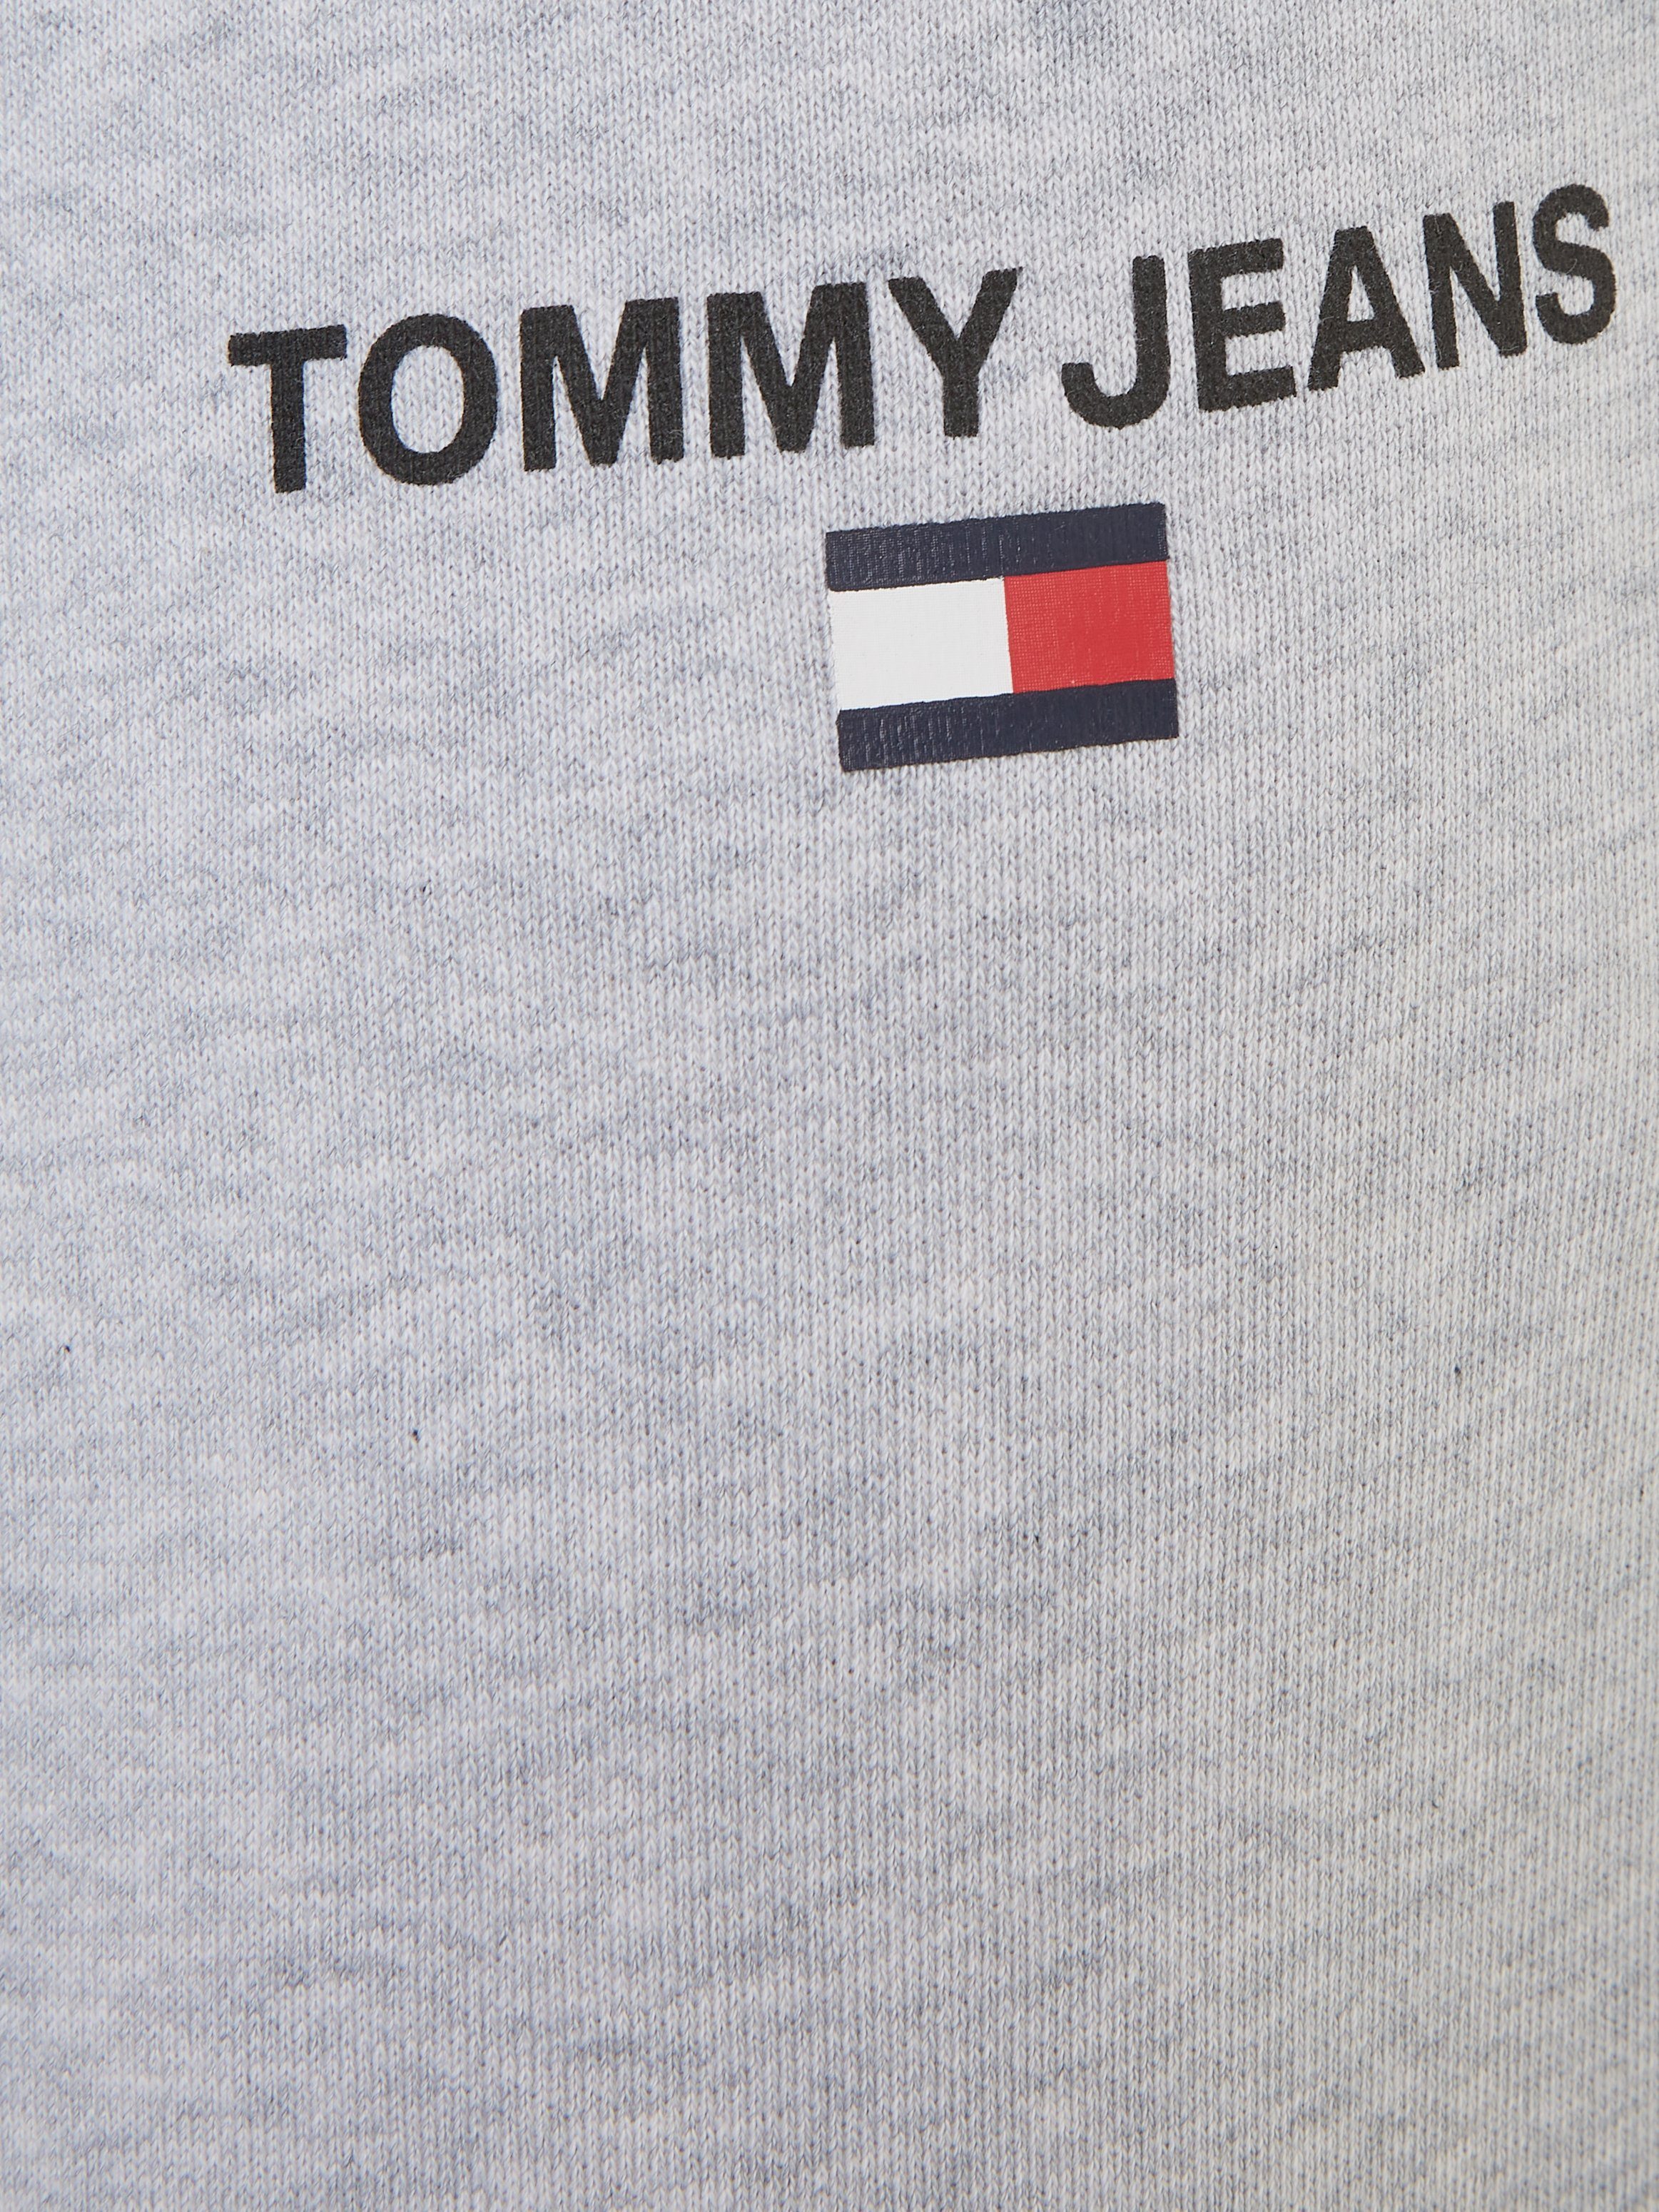 ENTRY GRAPHIC Silver Sweathose Grey TJM JOGGER Tommy REG Htr Jeans